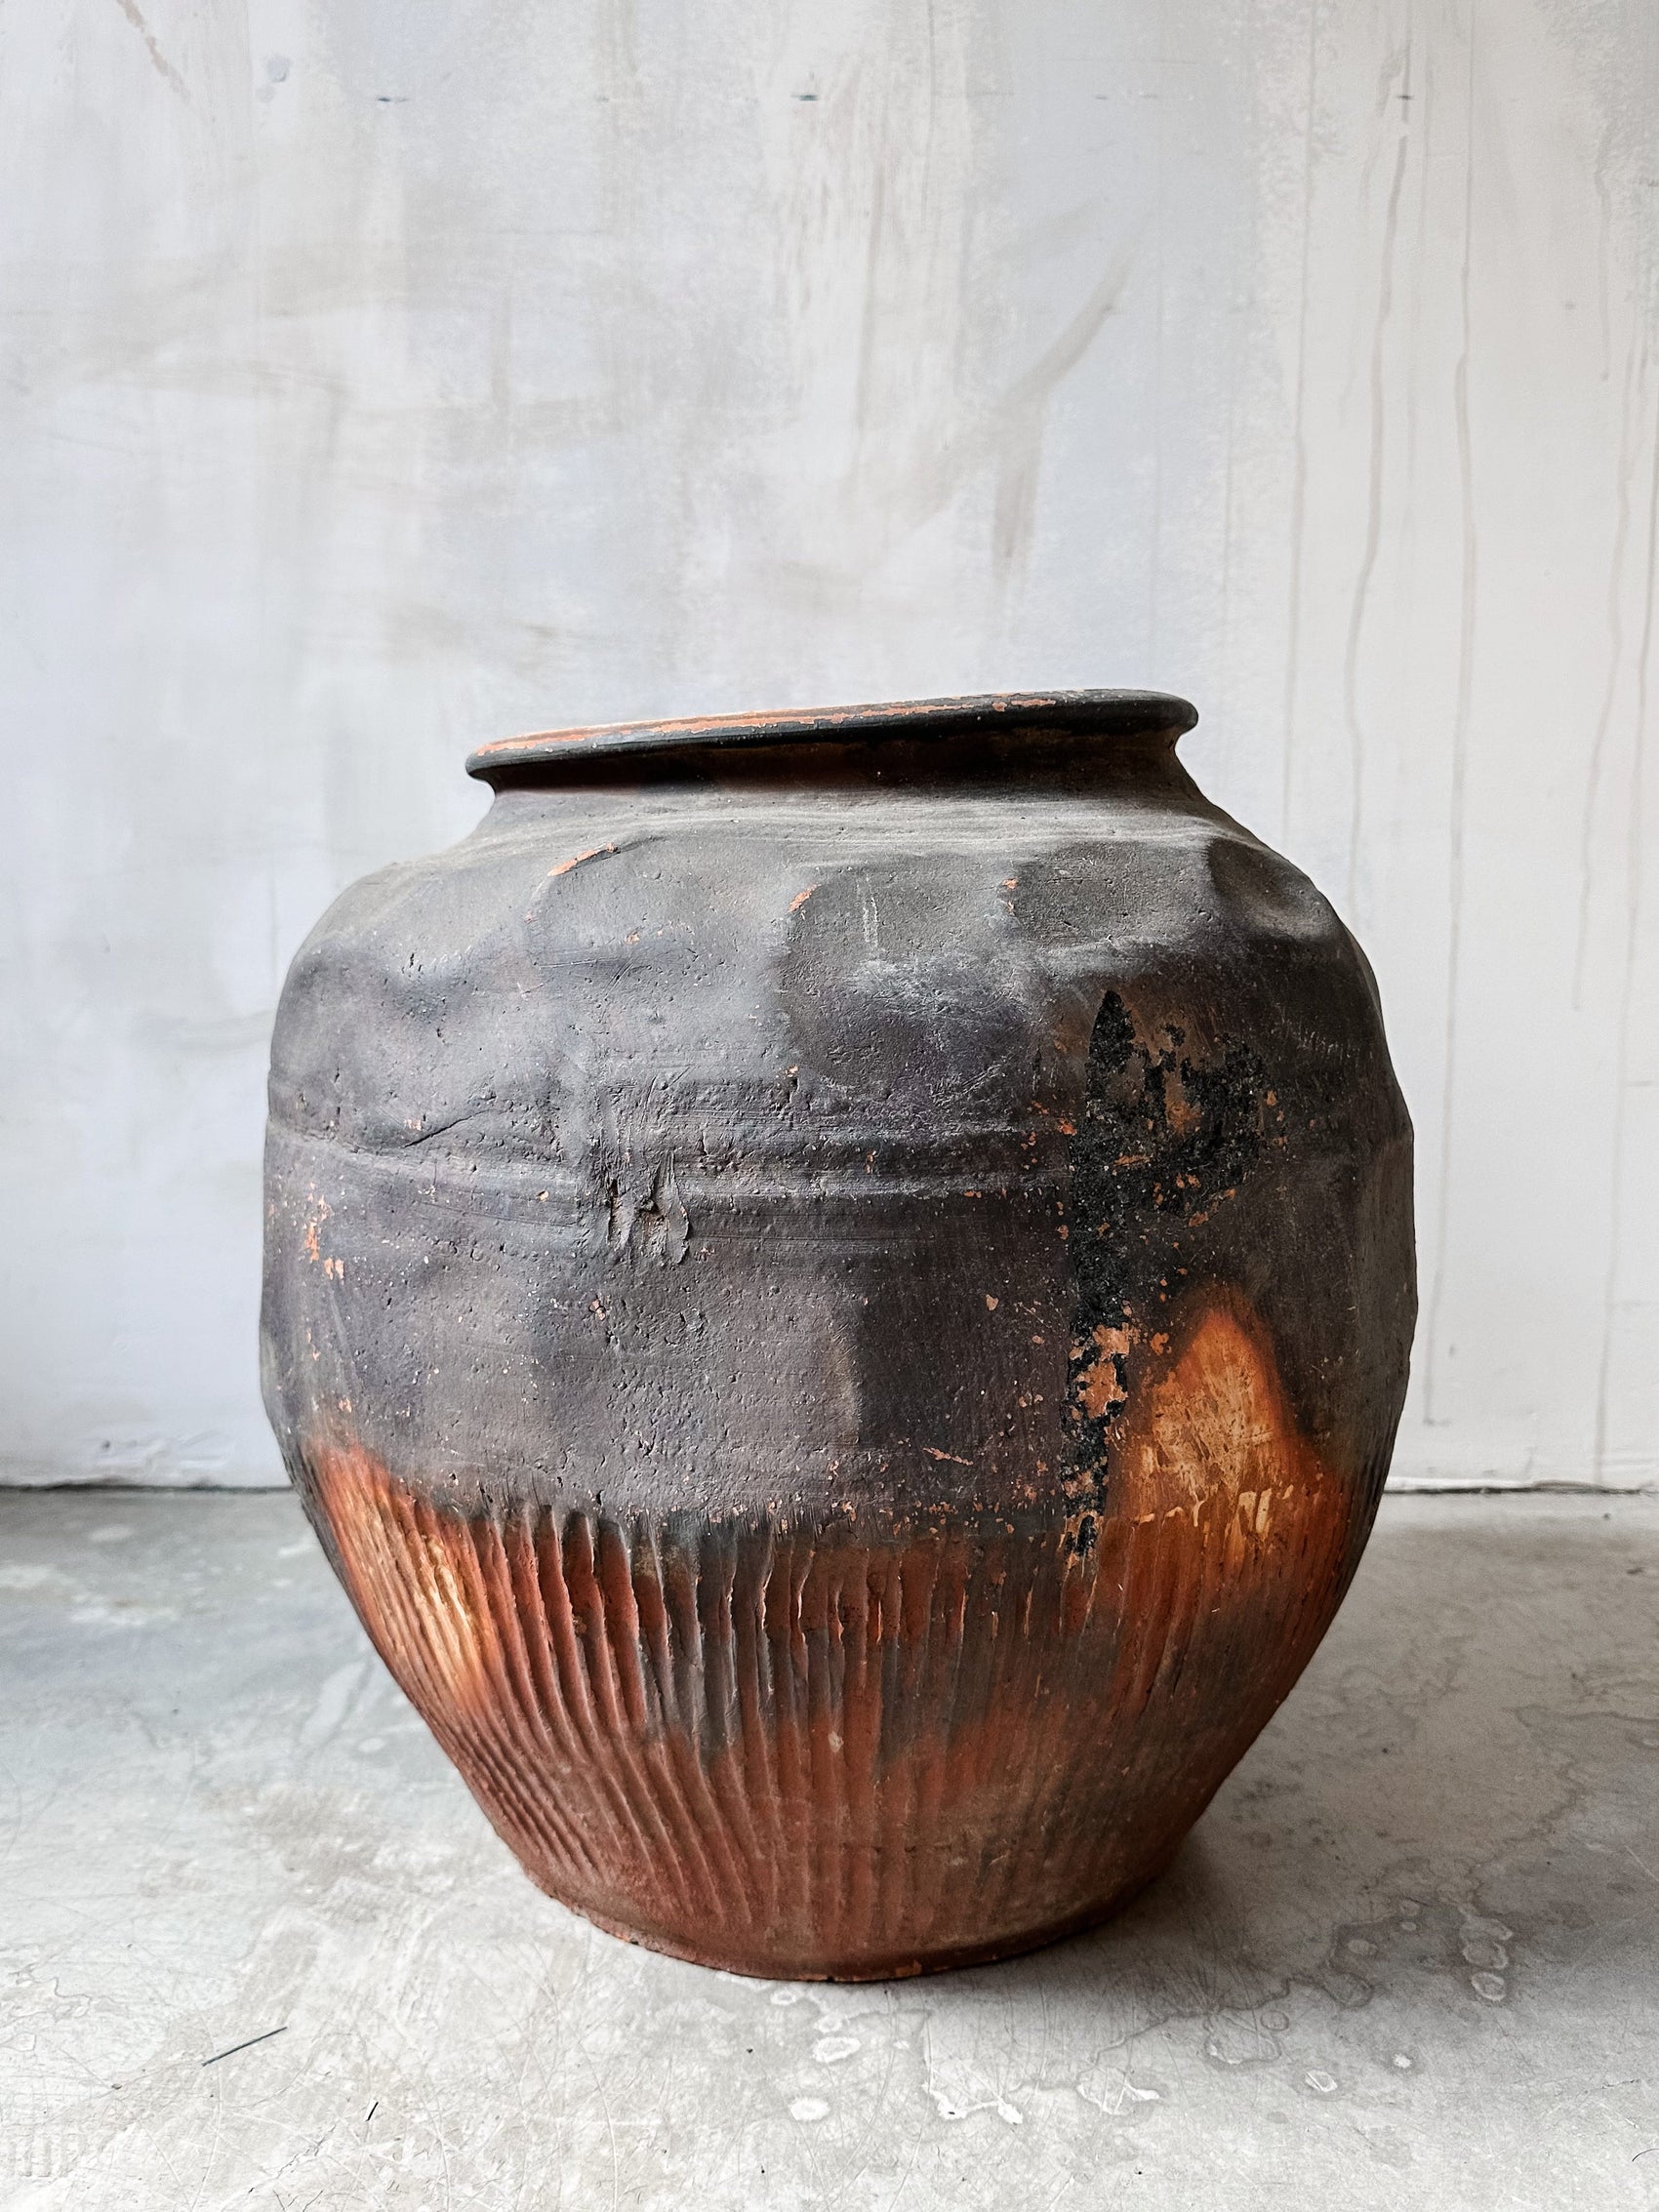 Unglazed terracotta pot